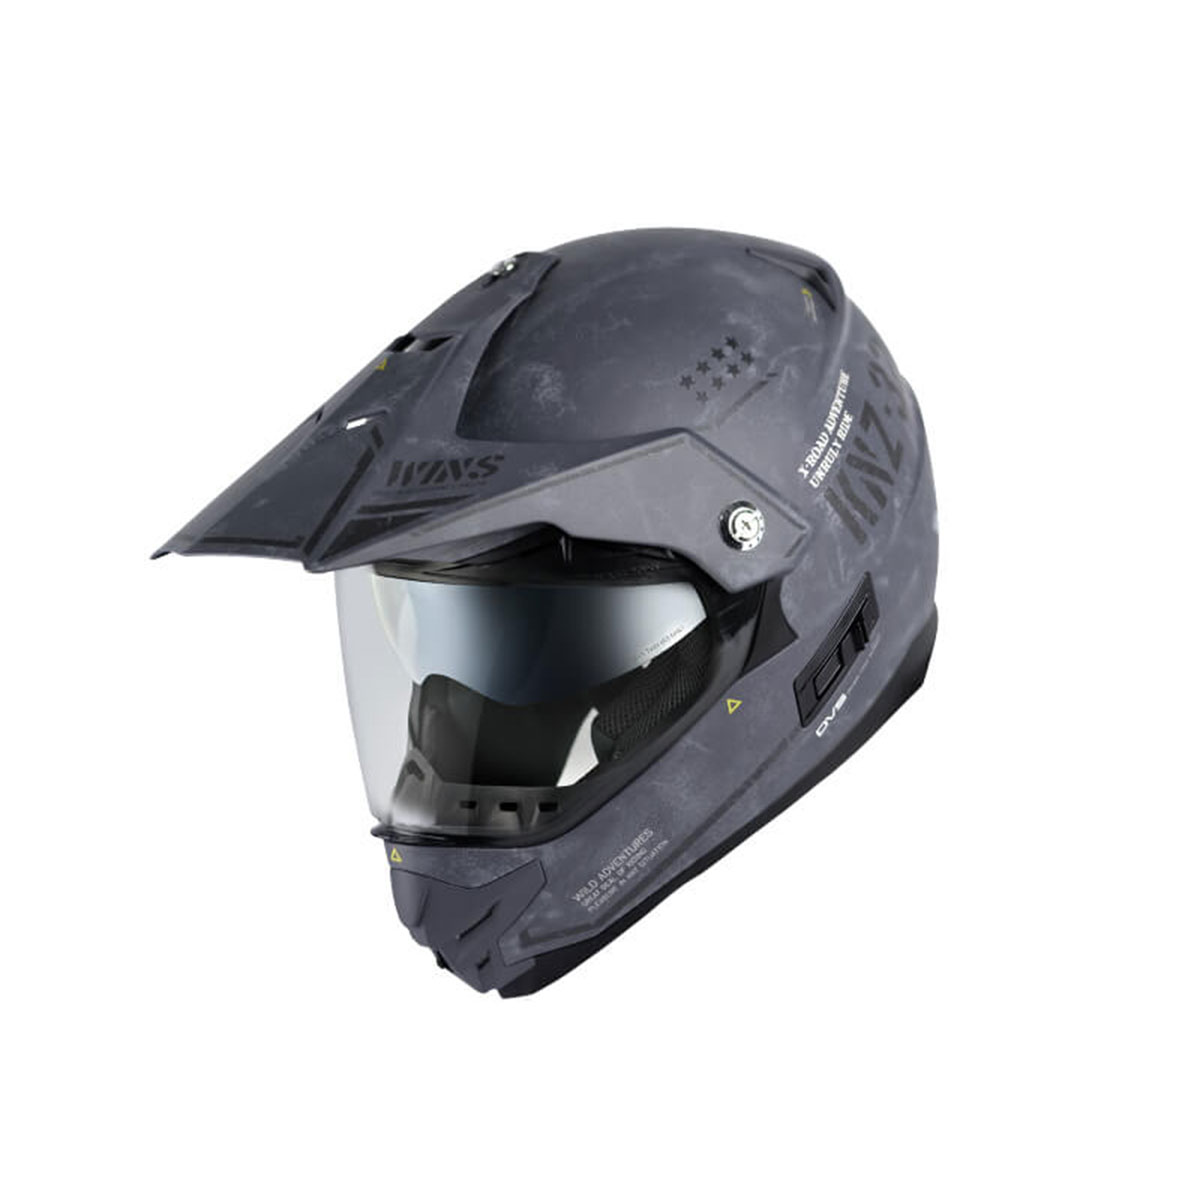 WINS X-ROAD COMBAT ヘルメット マットアーミーグレー| Dirtbikeplus 